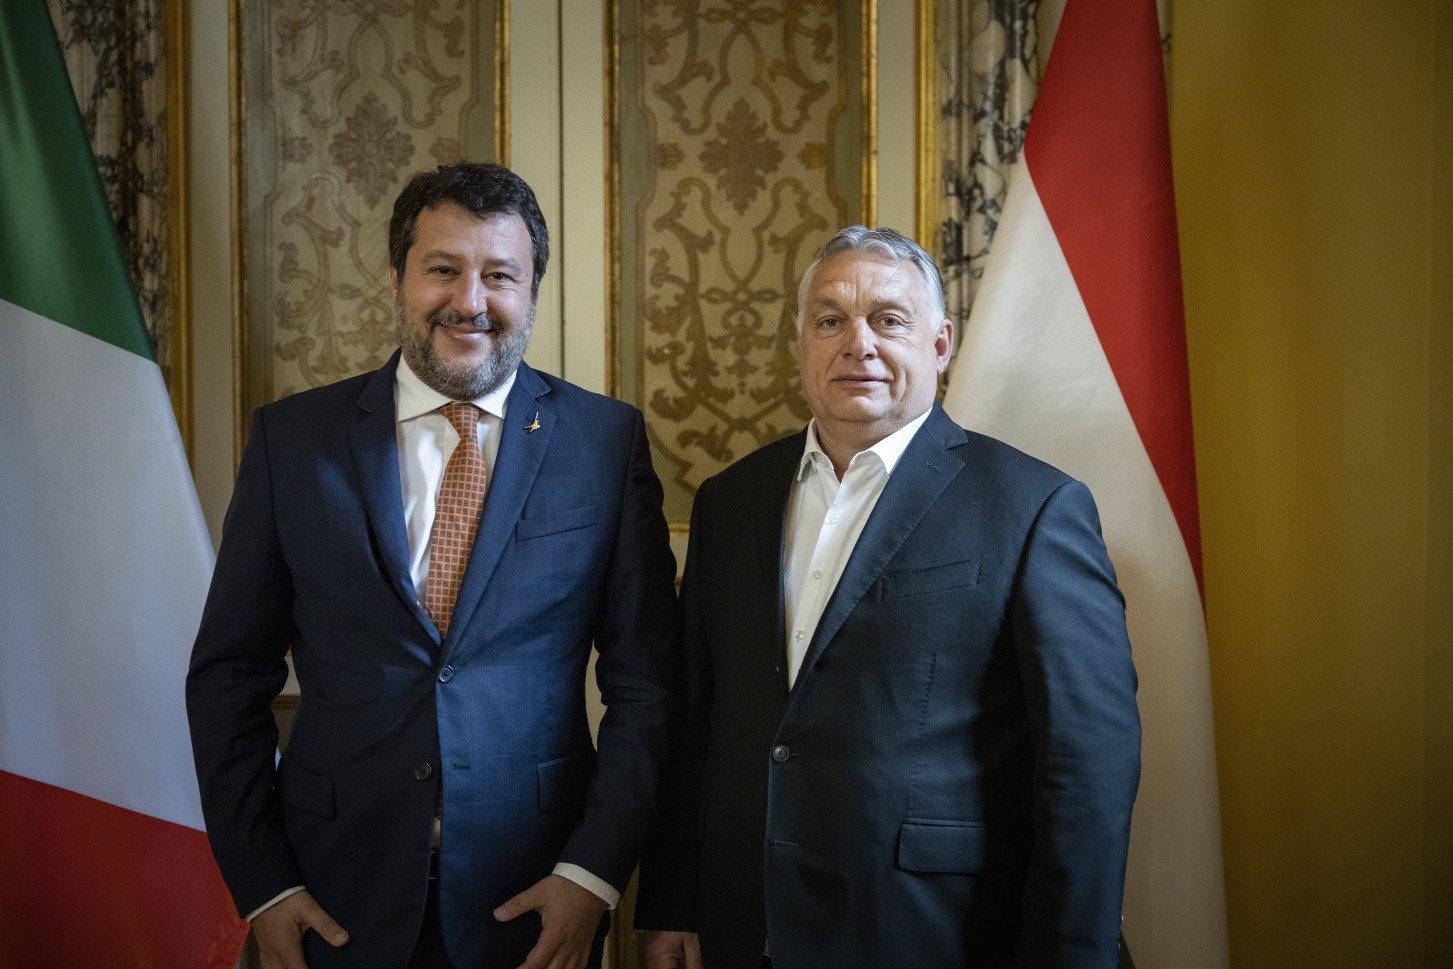 Orbán to Meet Far-Right Salvini in Rome